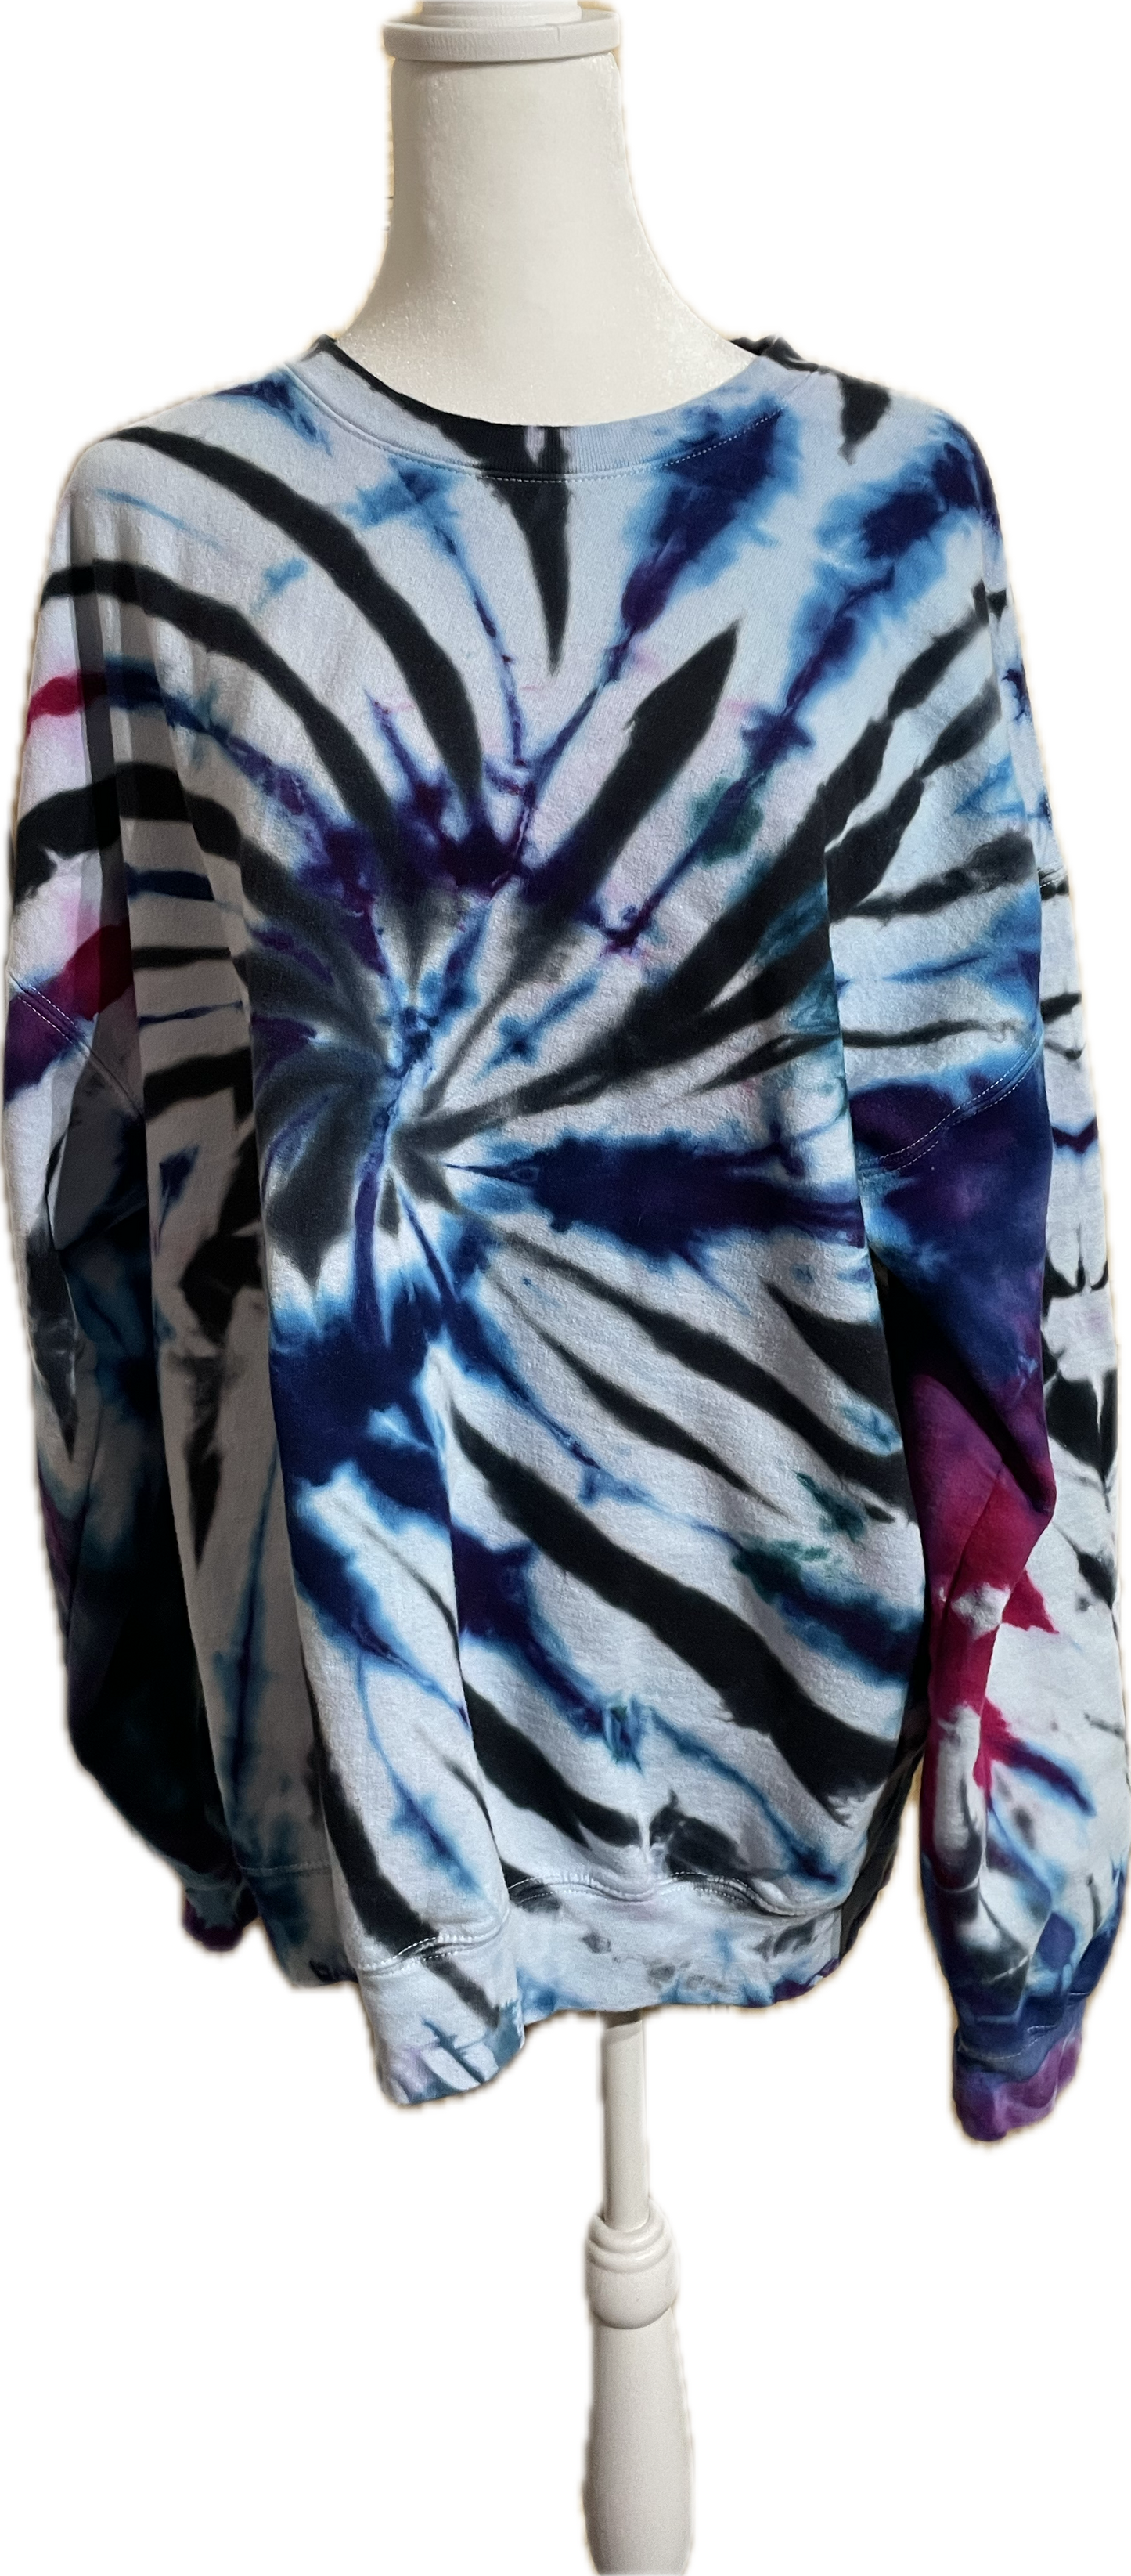 Size XLarge Black pink teal and blue spiral tie dye crewneck sweatshirt